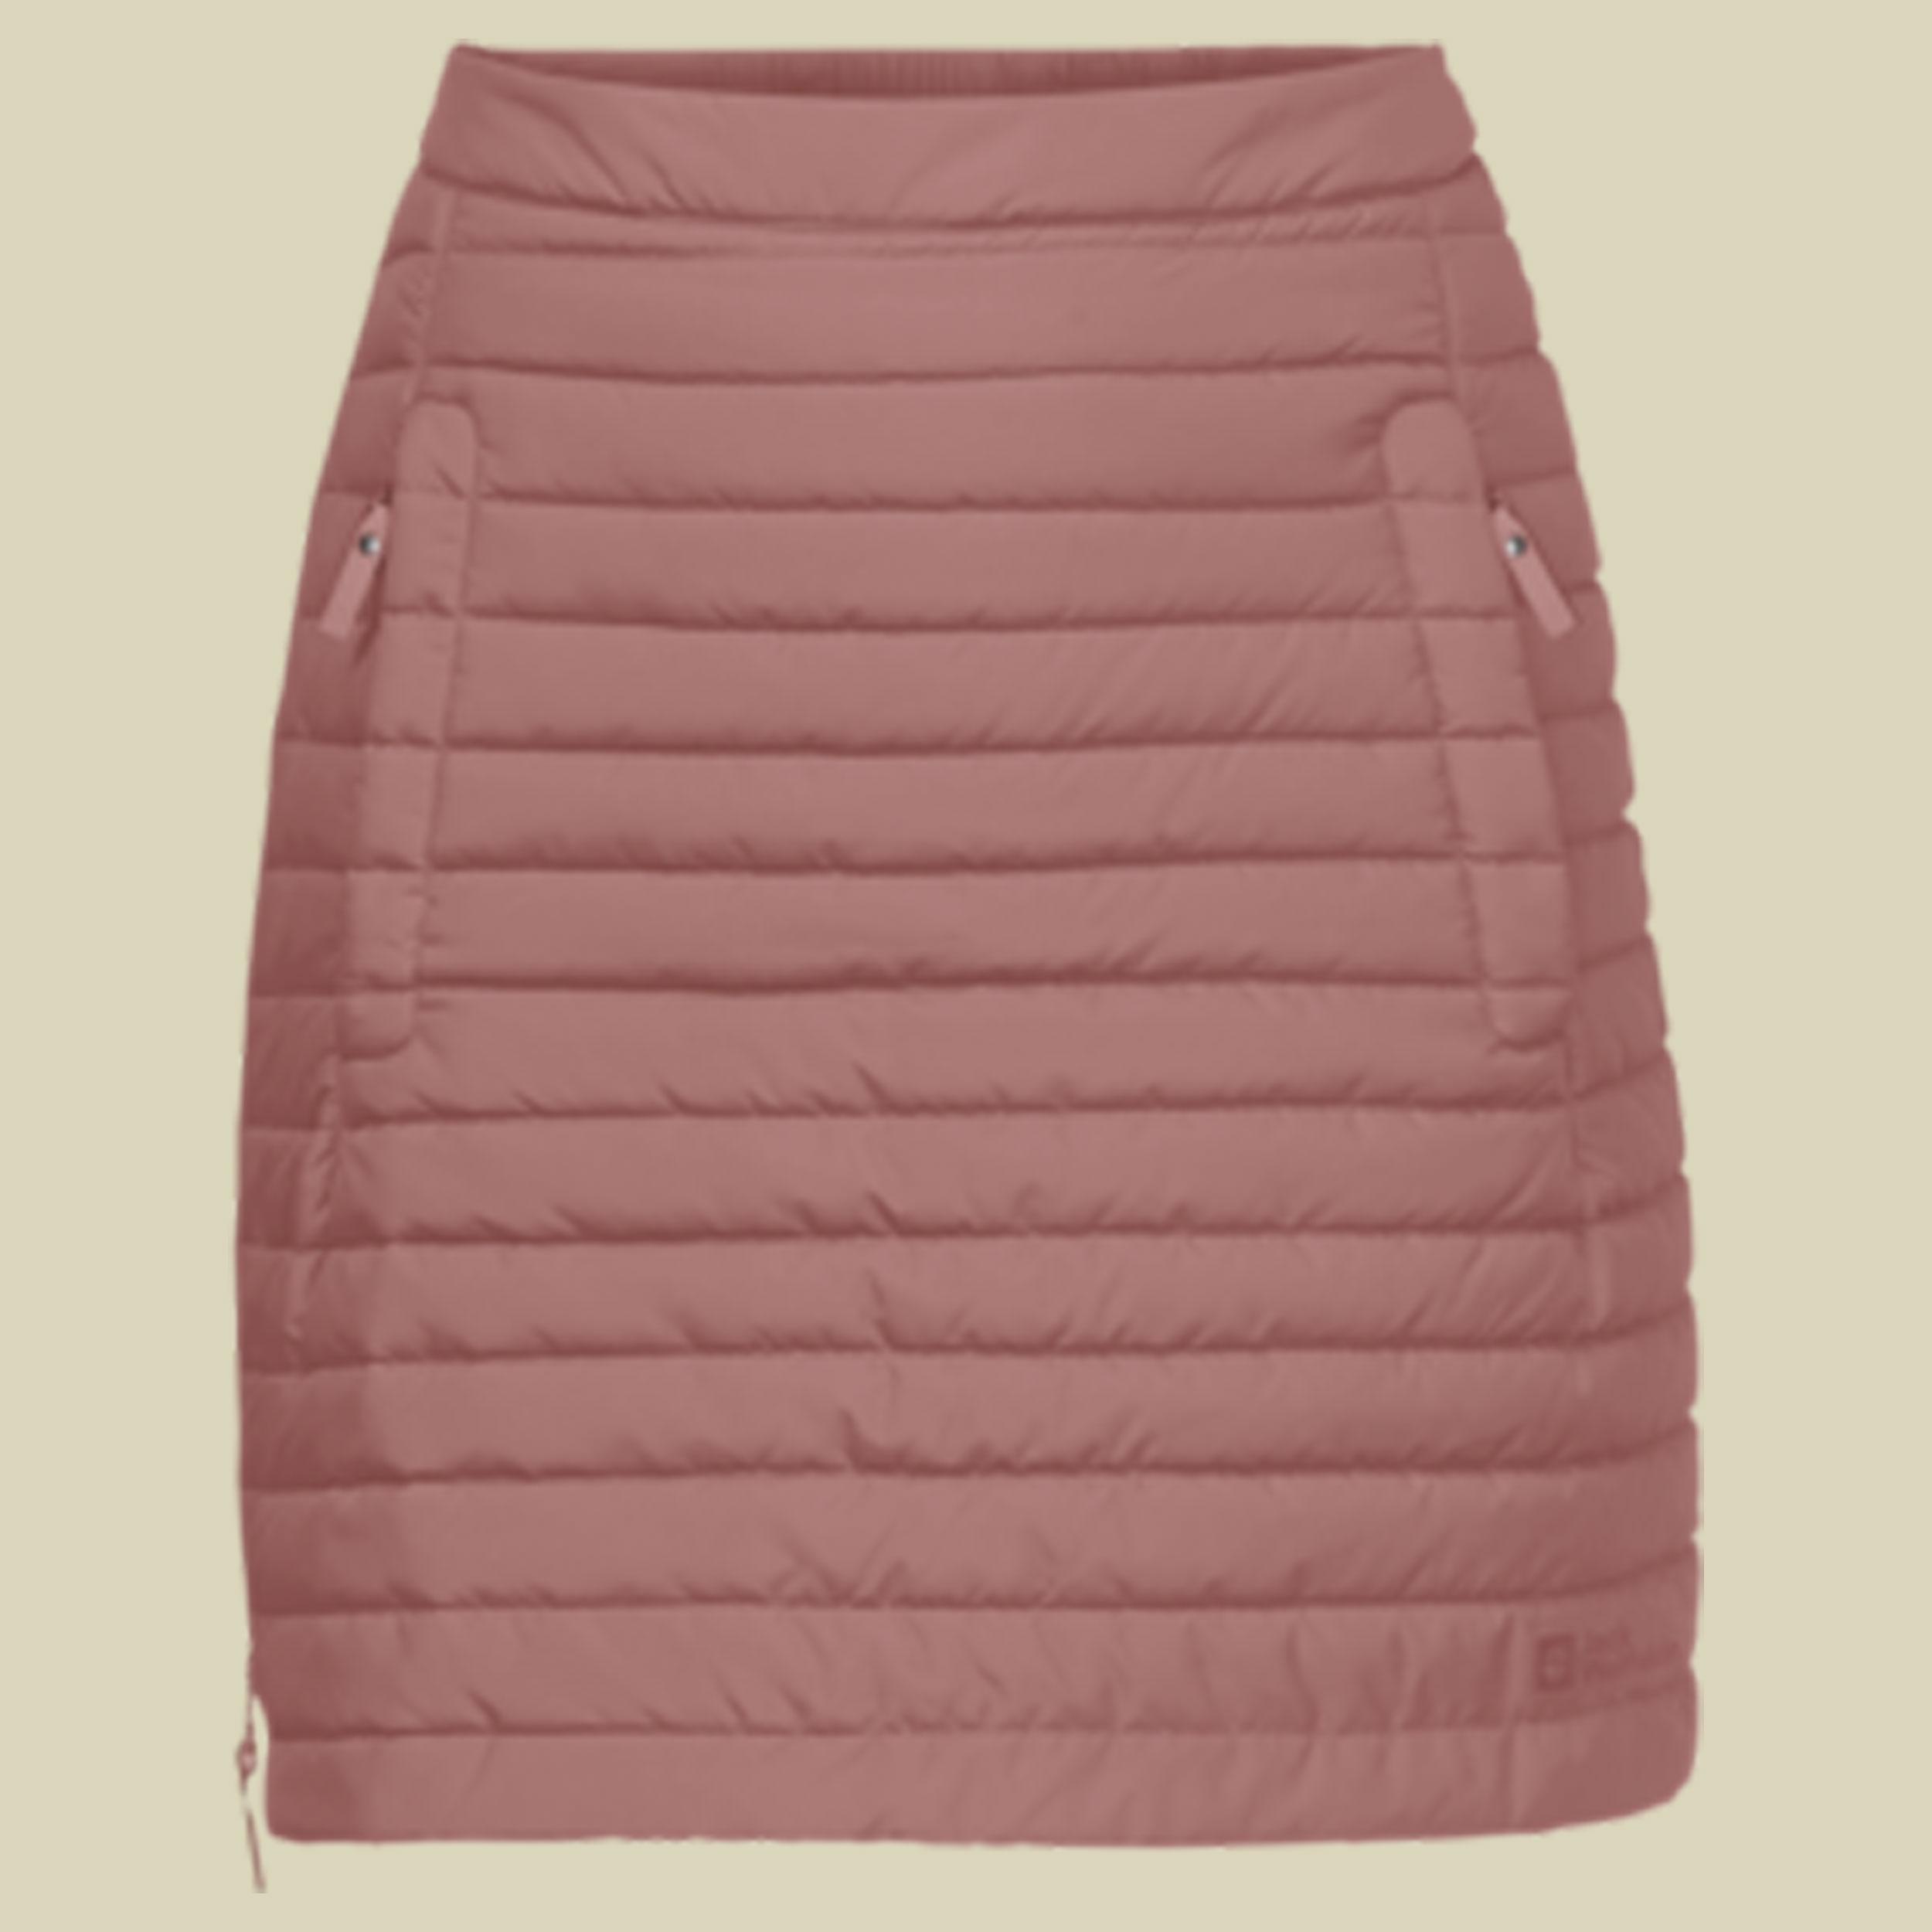 Iceguard Skirt  Größe M  Farbe afterglow